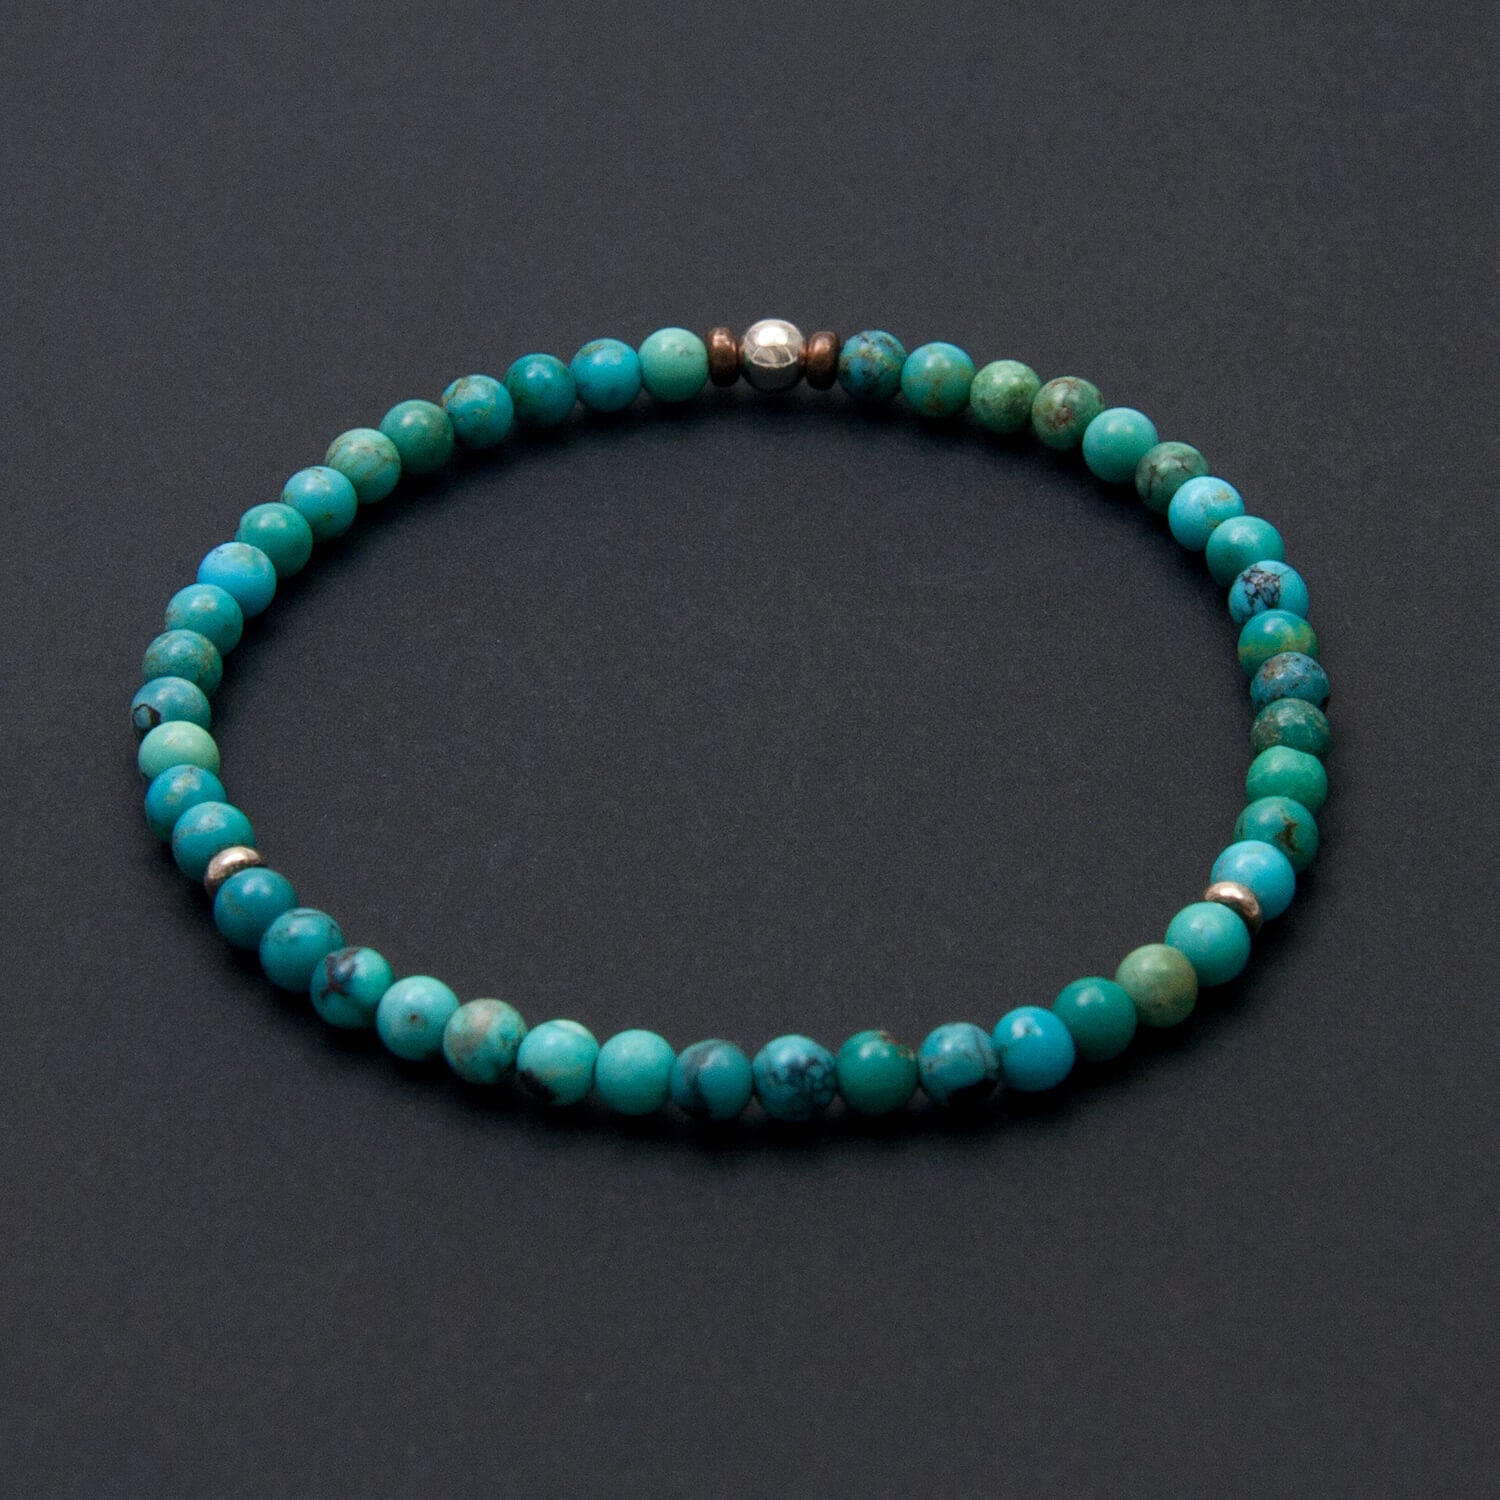 Circular Handmade Turquoise Bracelet - Kashmir Origin